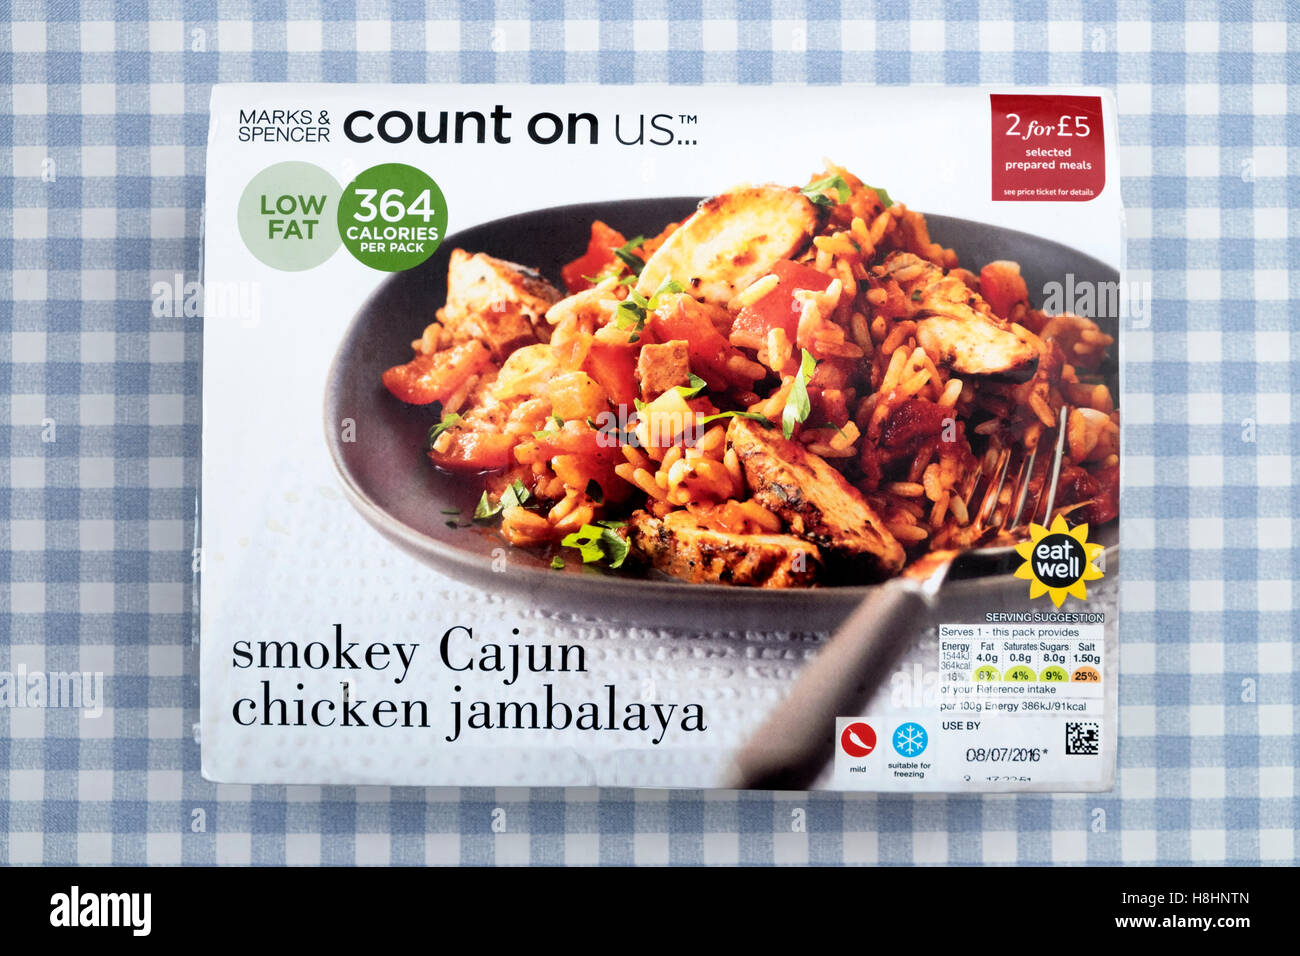 Marks and Spencer count on us smokey cajun chicken jambalaya Stock Photo